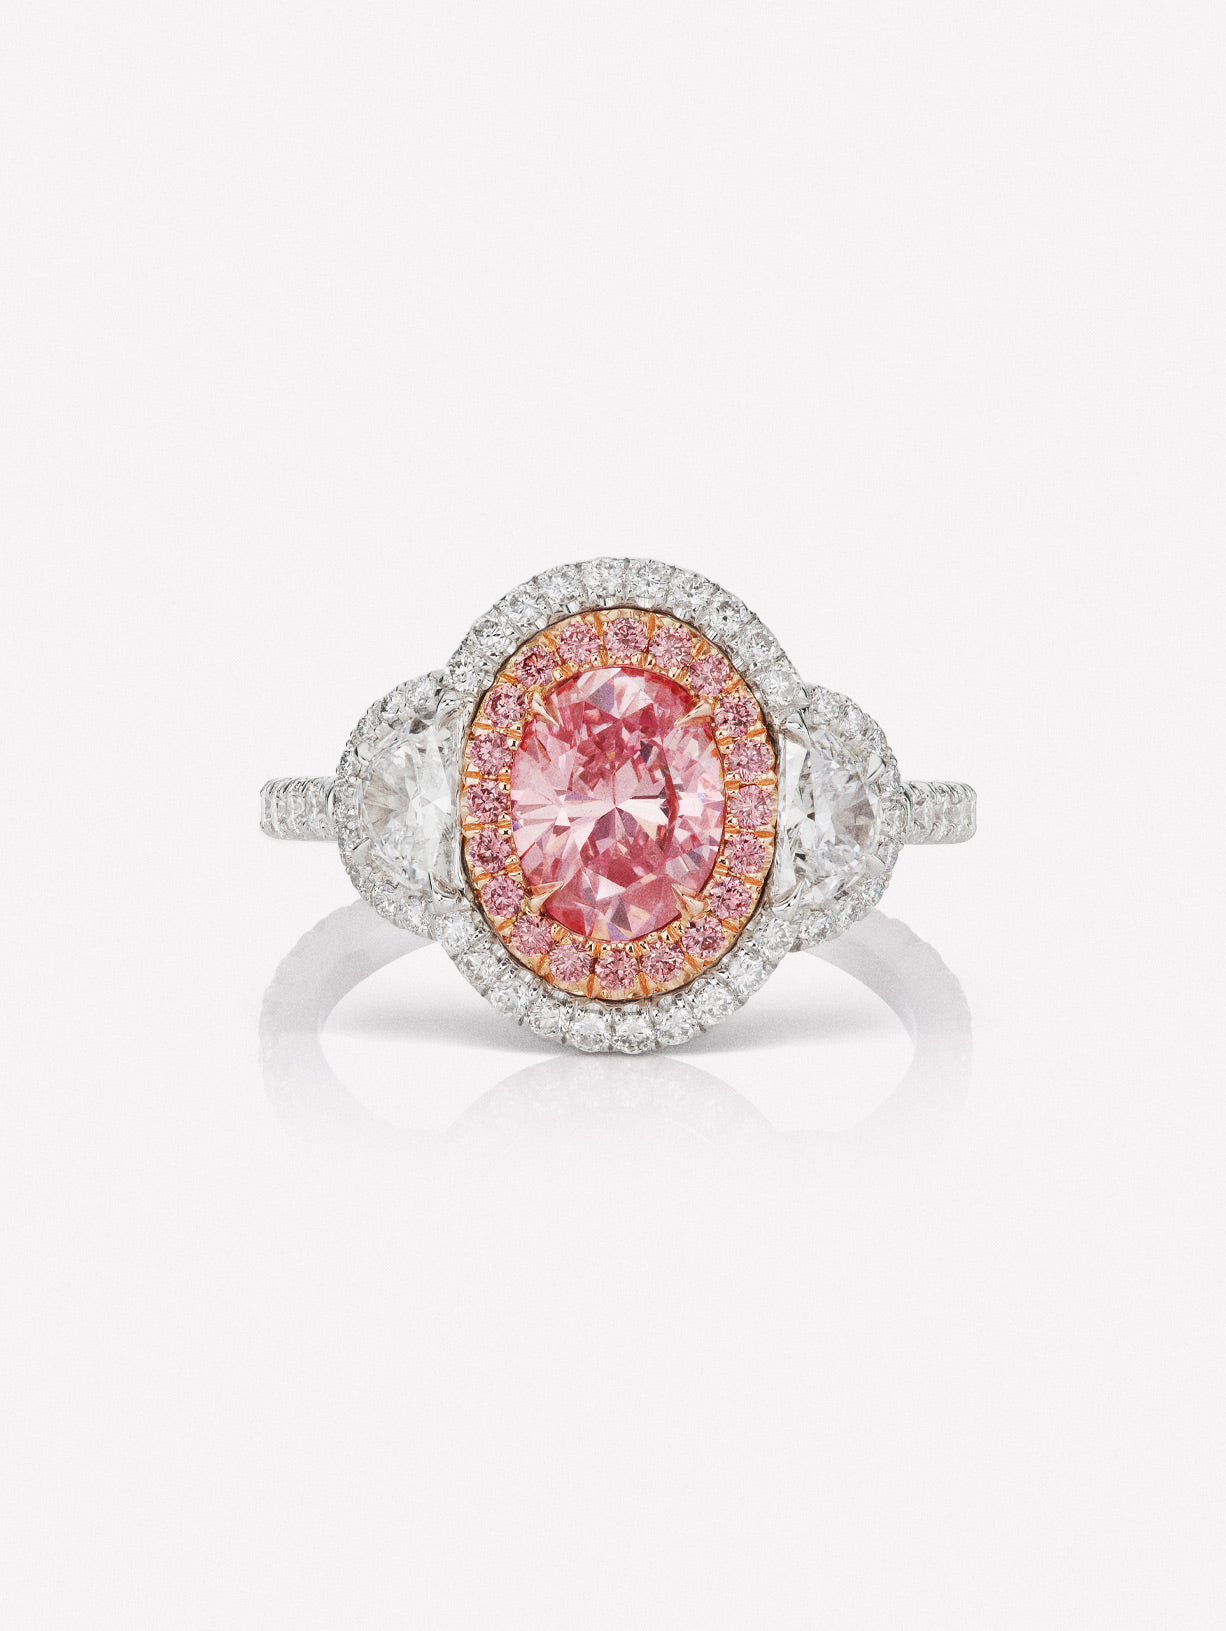 Intense Pink Oval Diamond Ring - Pink Diamonds, J FINE - J Fine, Rings - Pink Diamond Jewelry, intense-pink-oval-diamond-ring-j-fine - Argyle Pink Diamonds